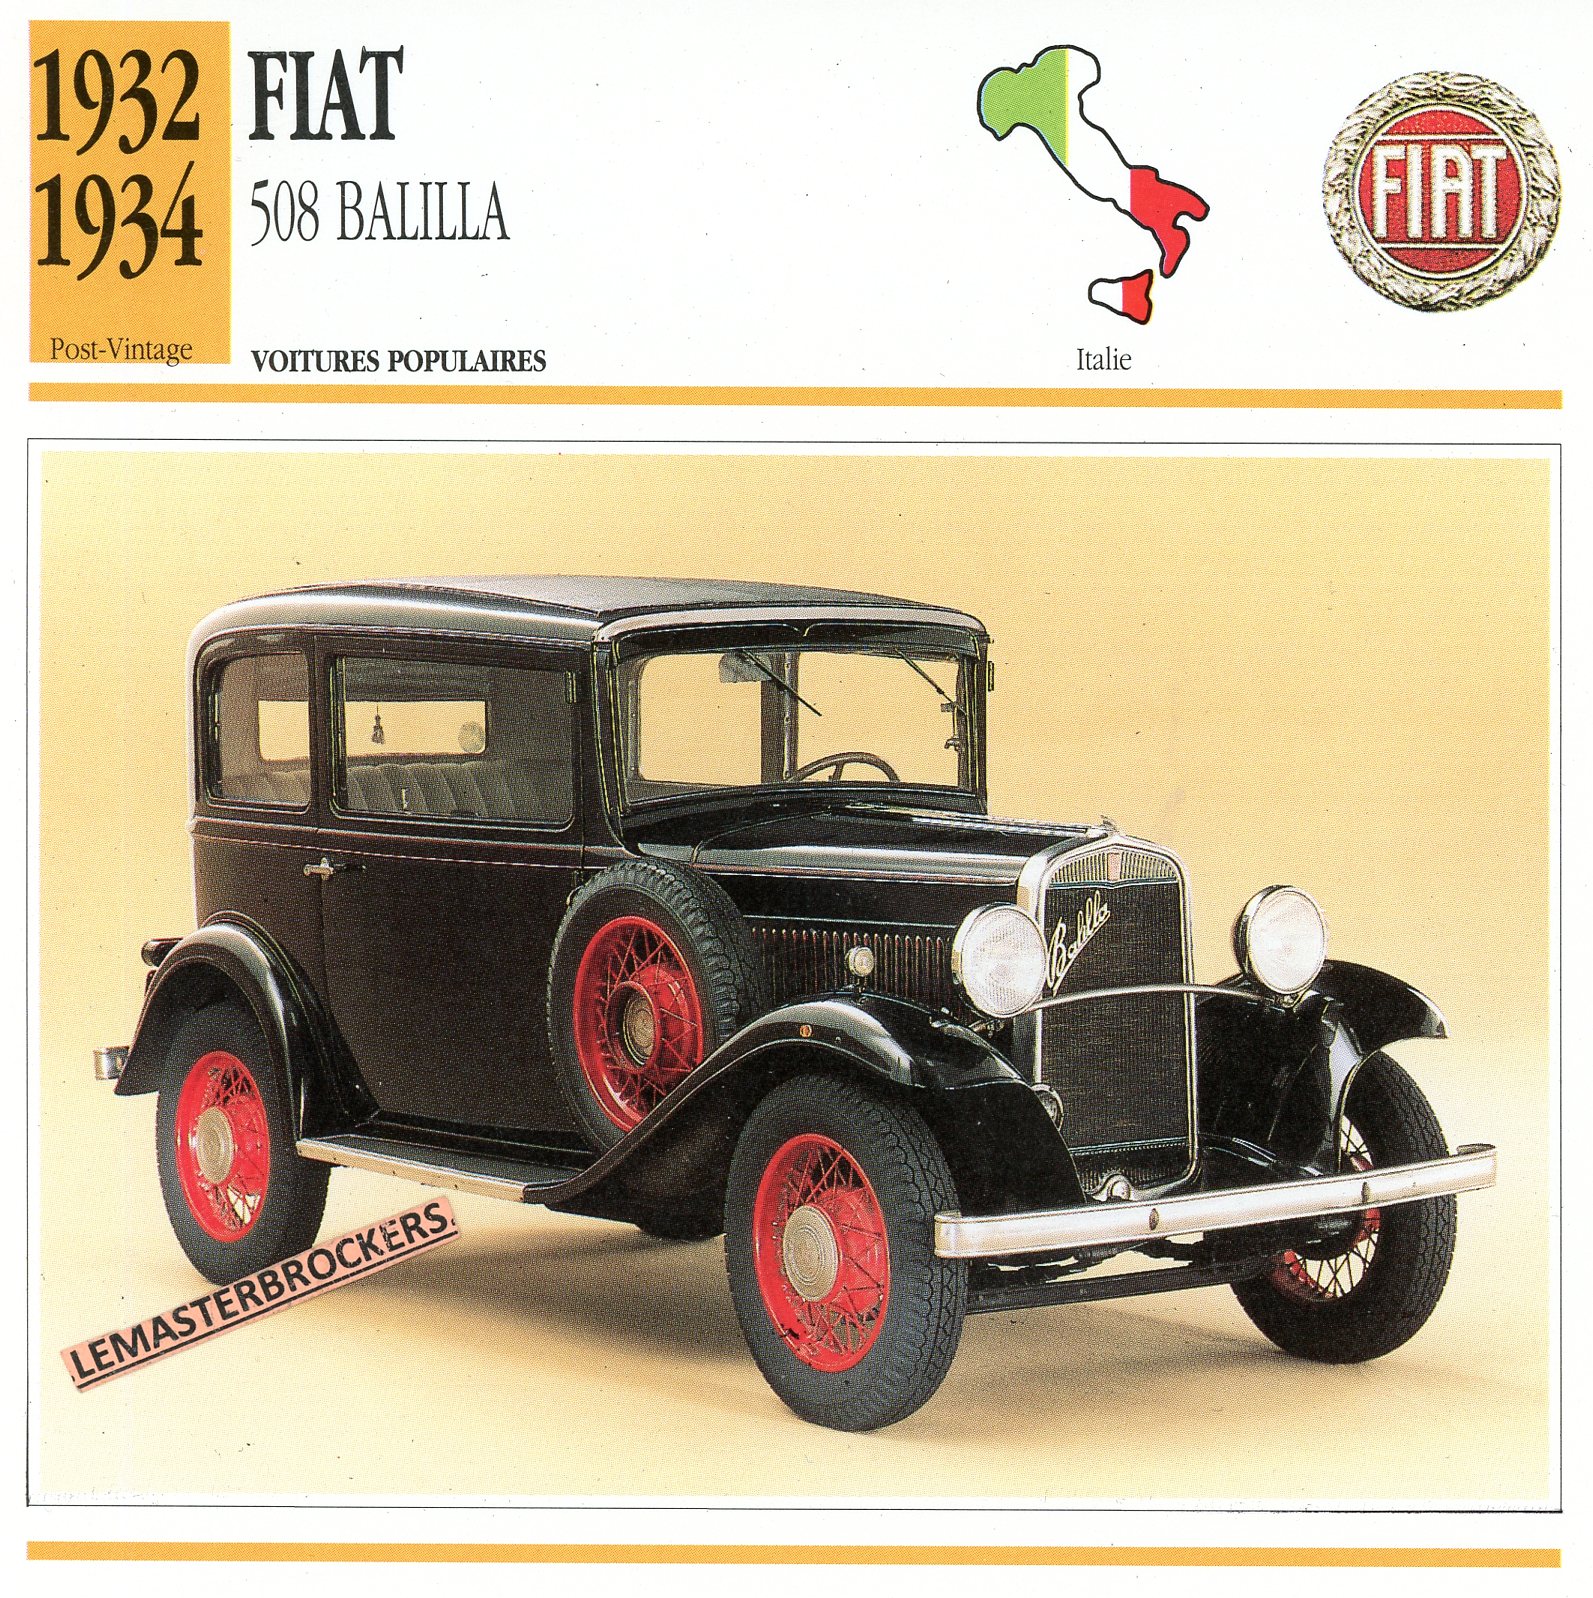 FIAT-508-BABILLA-1932-1934-FICHE-AUTO-CARD-CARS-LEMASTERBROCKERS